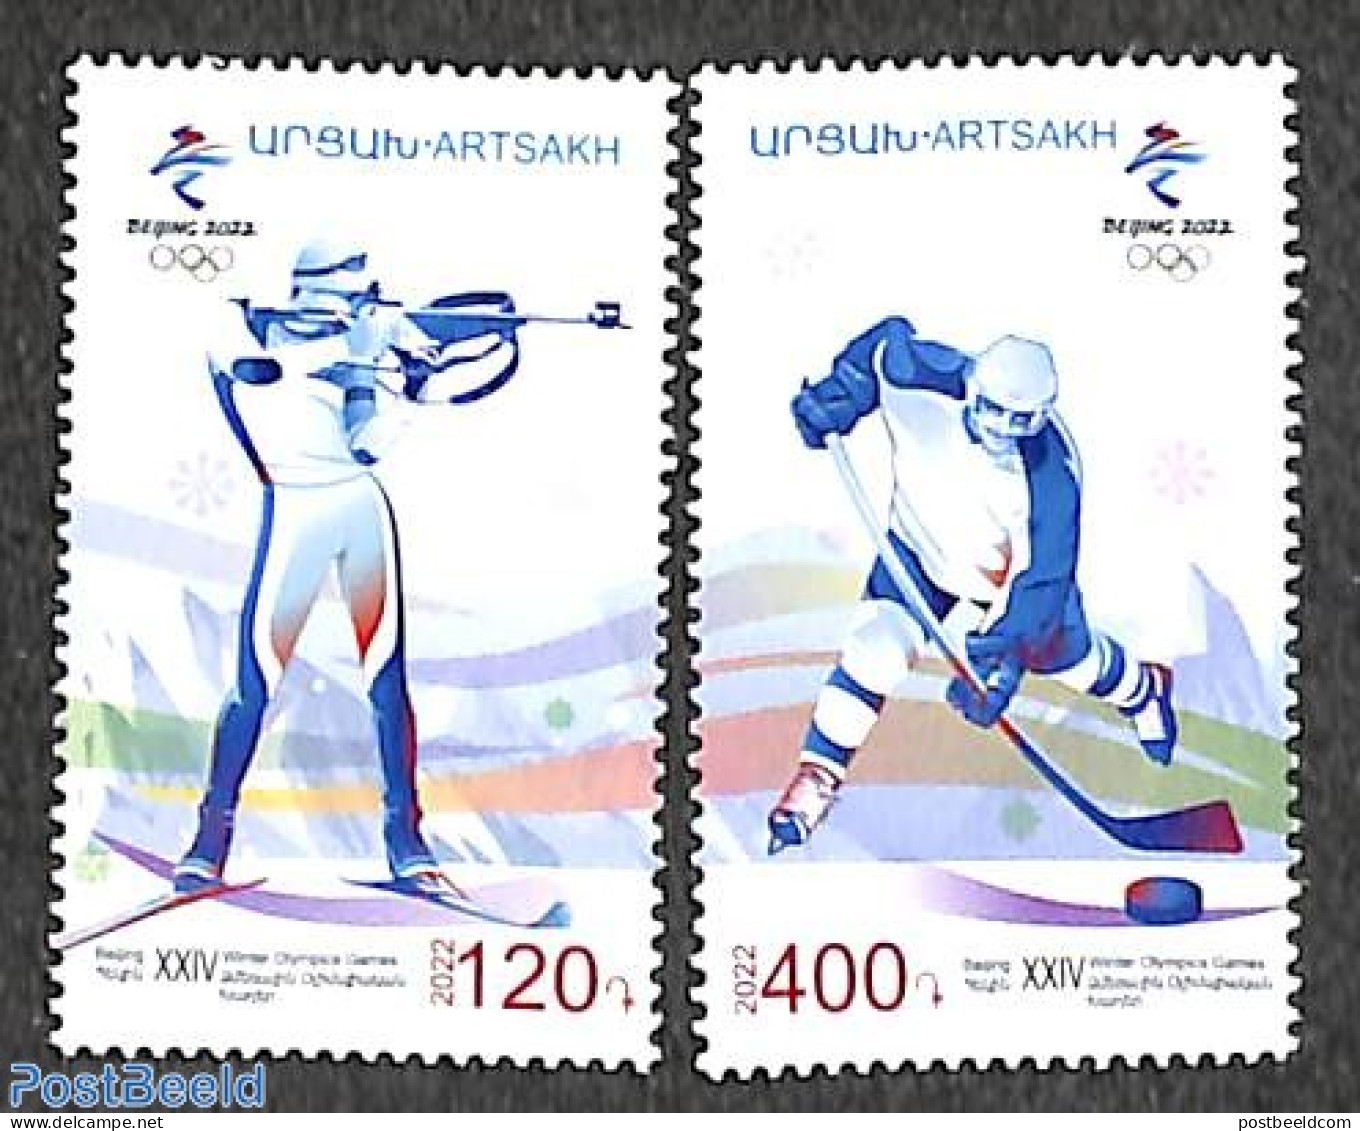 Nagorno-Karabakh 2022 Olympic Winter Games 2v, Mint NH, Sport - Ice Hockey - Olympic Winter Games - Hockey (Ijs)